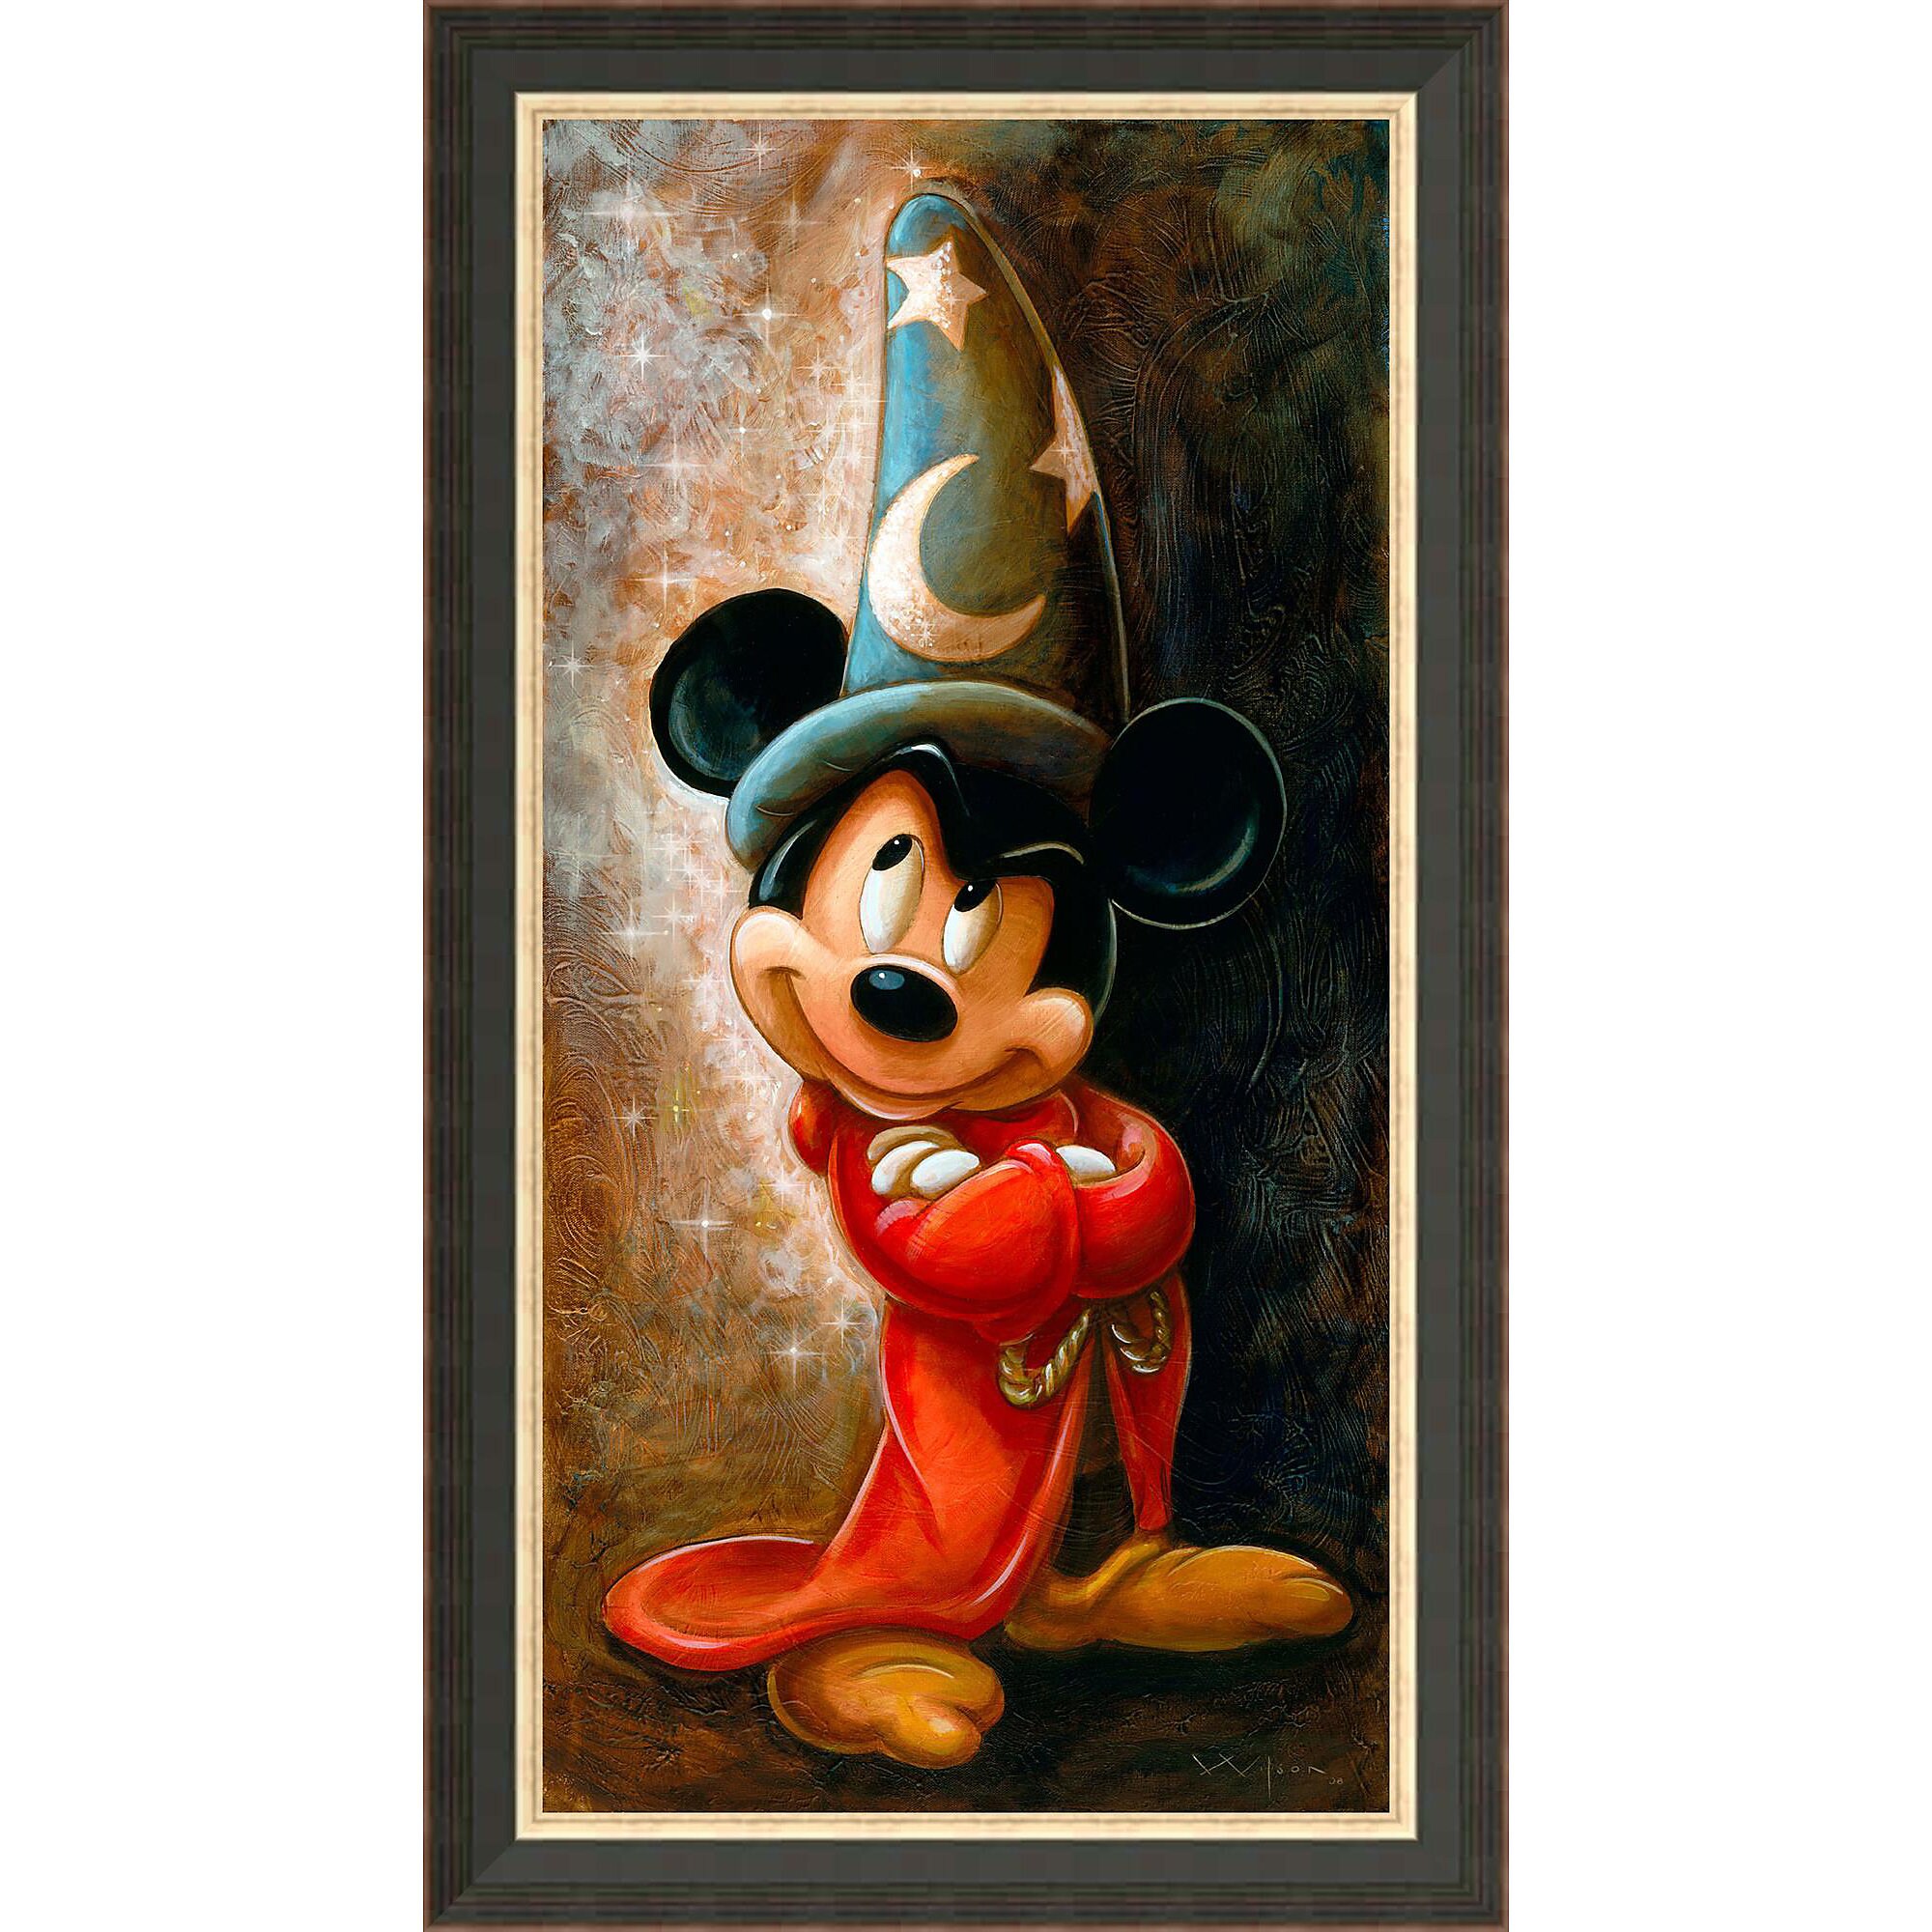 Sorcerer Mickey Mouse Giclée by Darren Wilson